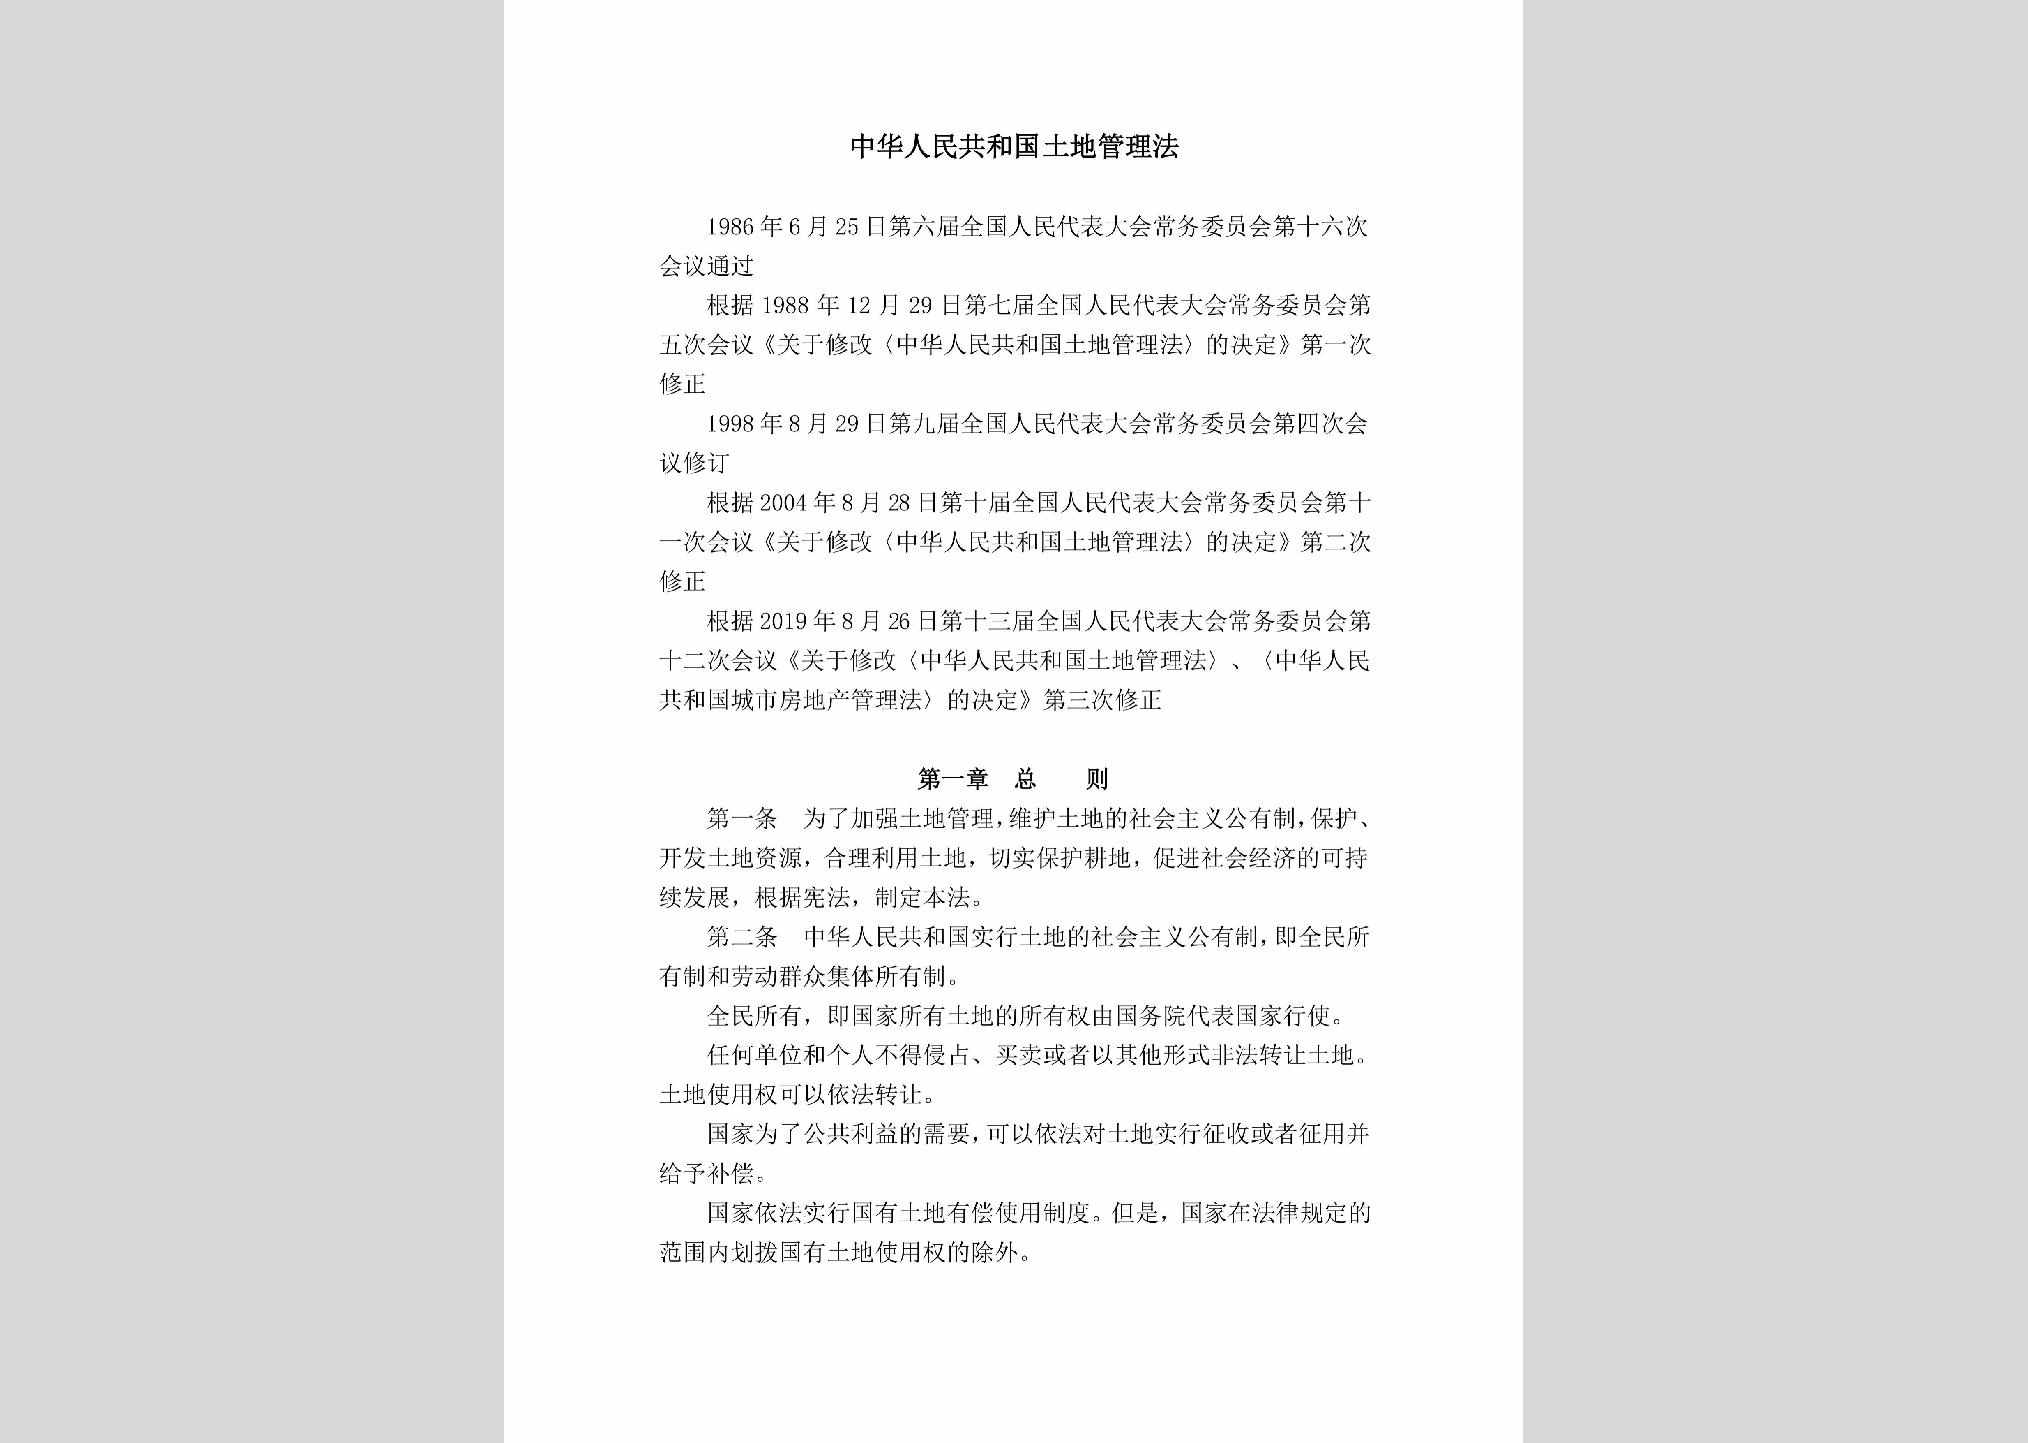 ZHRMGHGT：中华人民共和国土地管理法